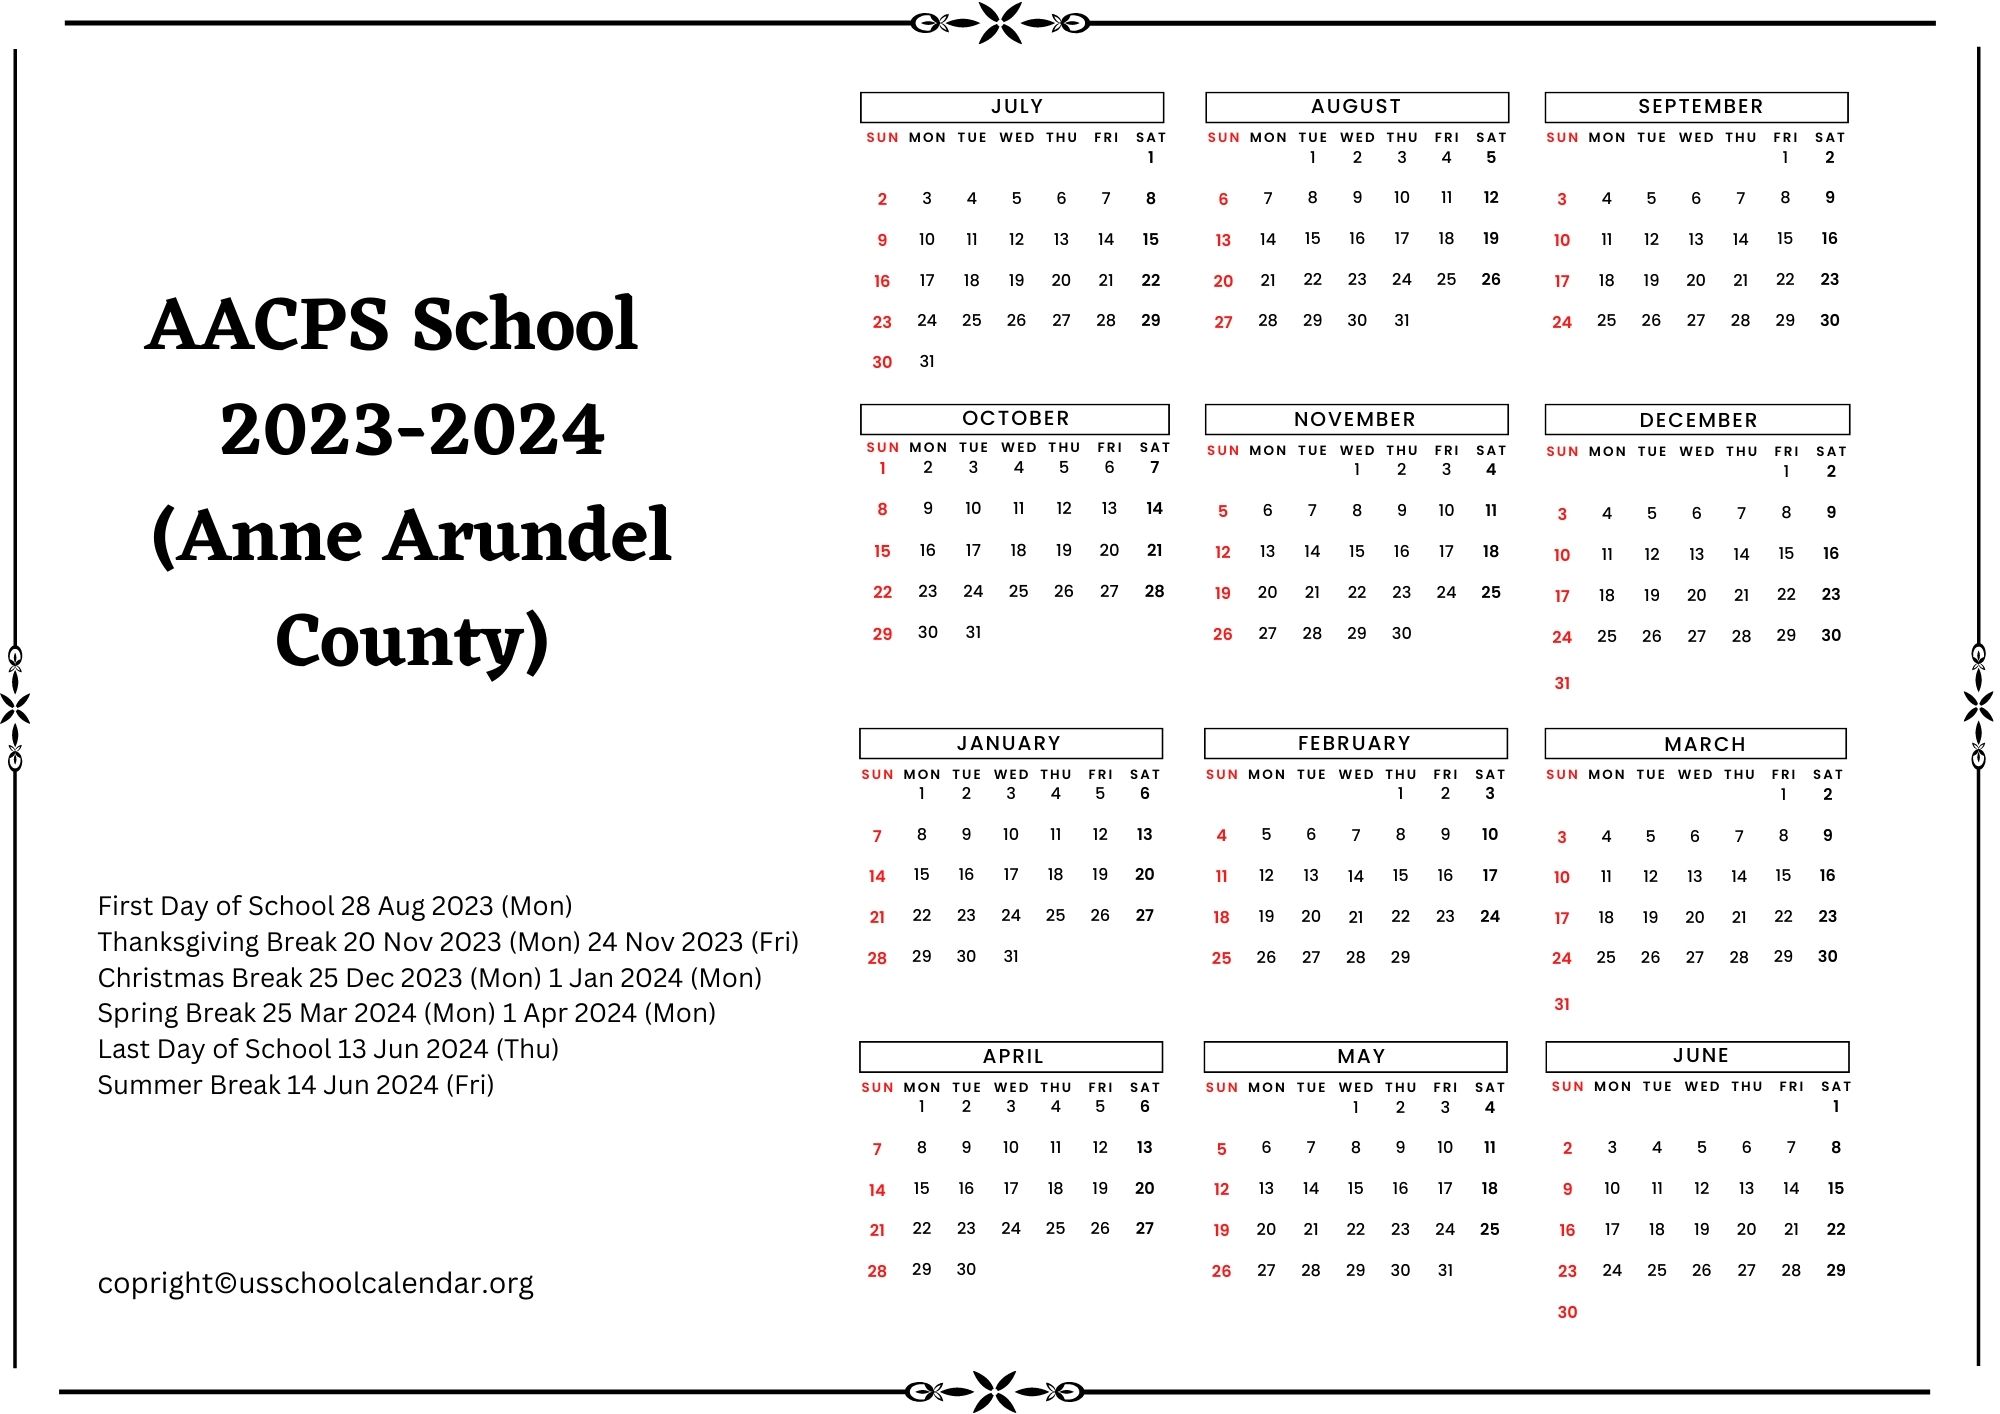 AACPS School Calendar for 20232024 [Anne Arundel County]